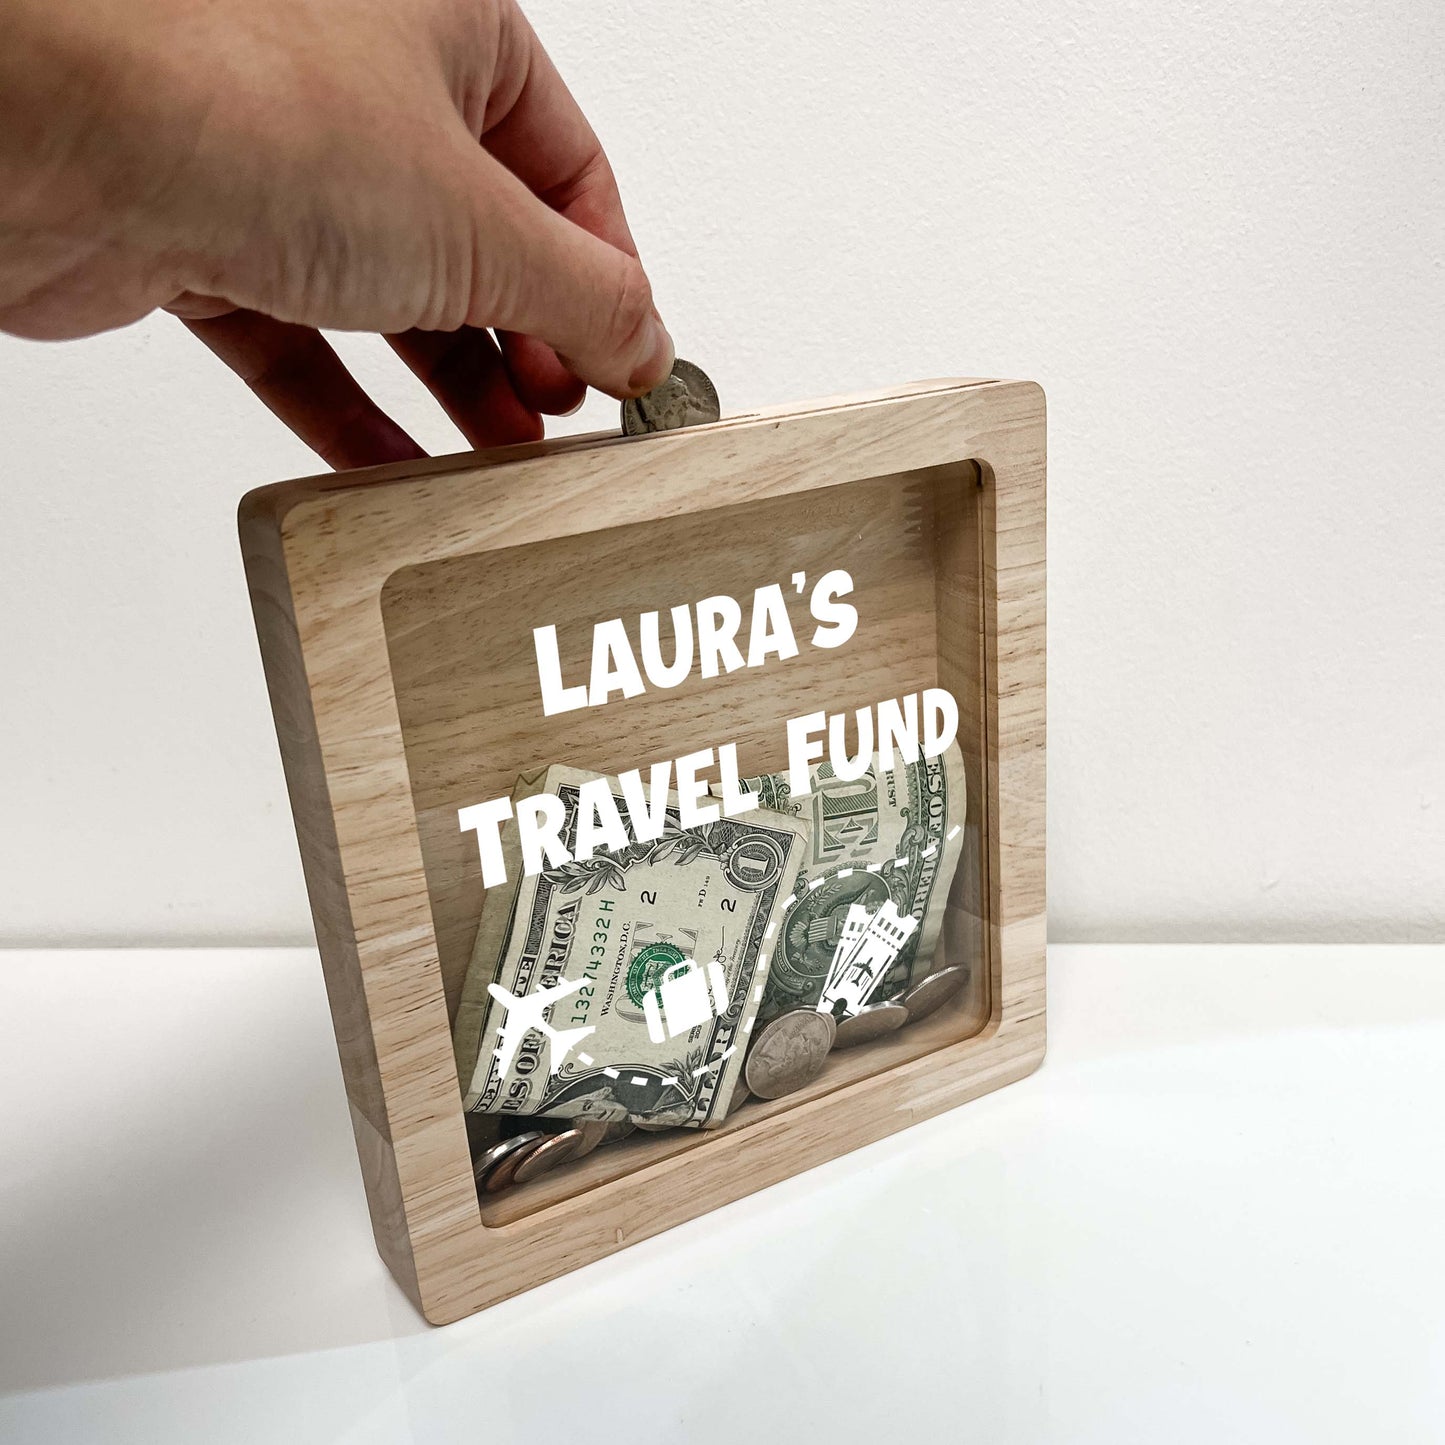 Personalized Travel Fund Savings Banks